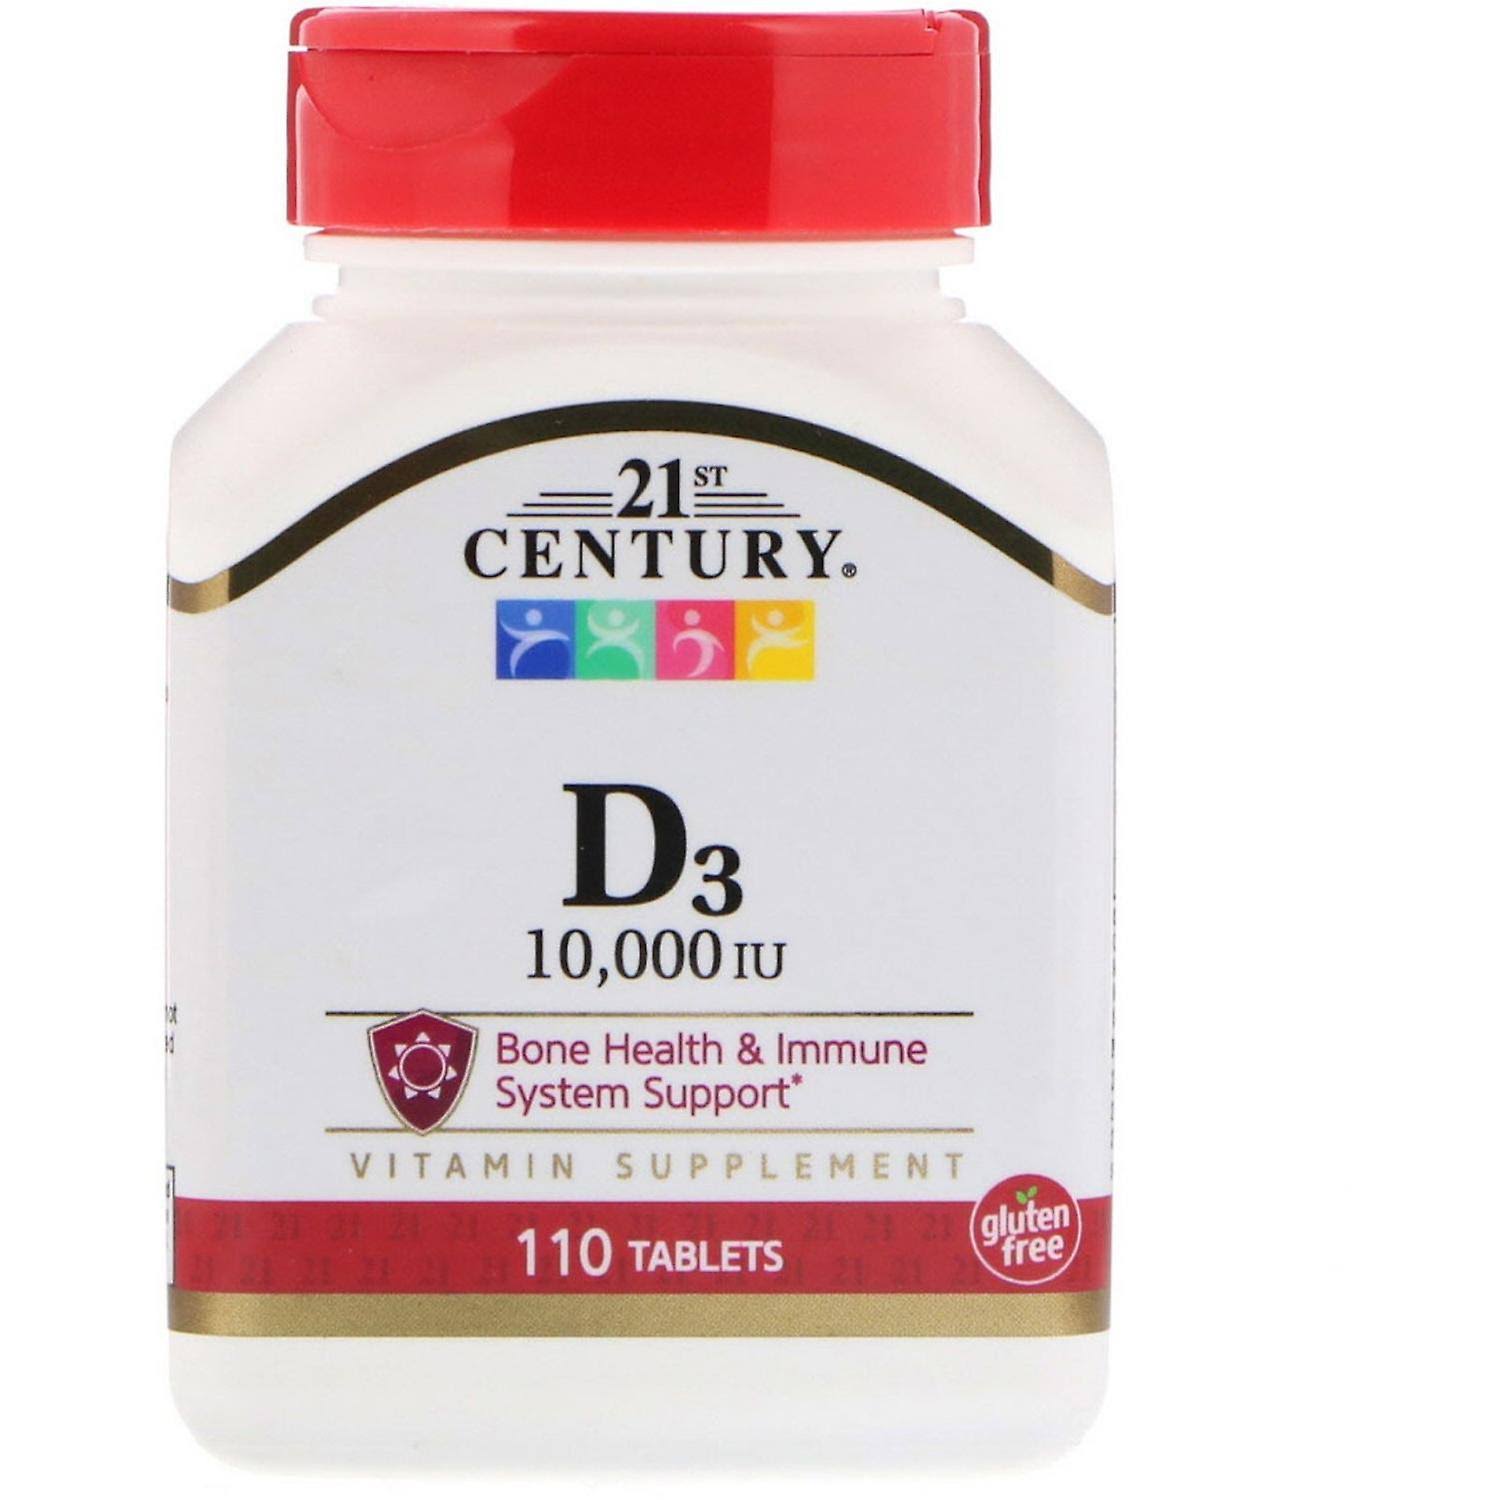 21st Century Ultra Strength D3 10 000 IU Vitamin Supplement - 110ct